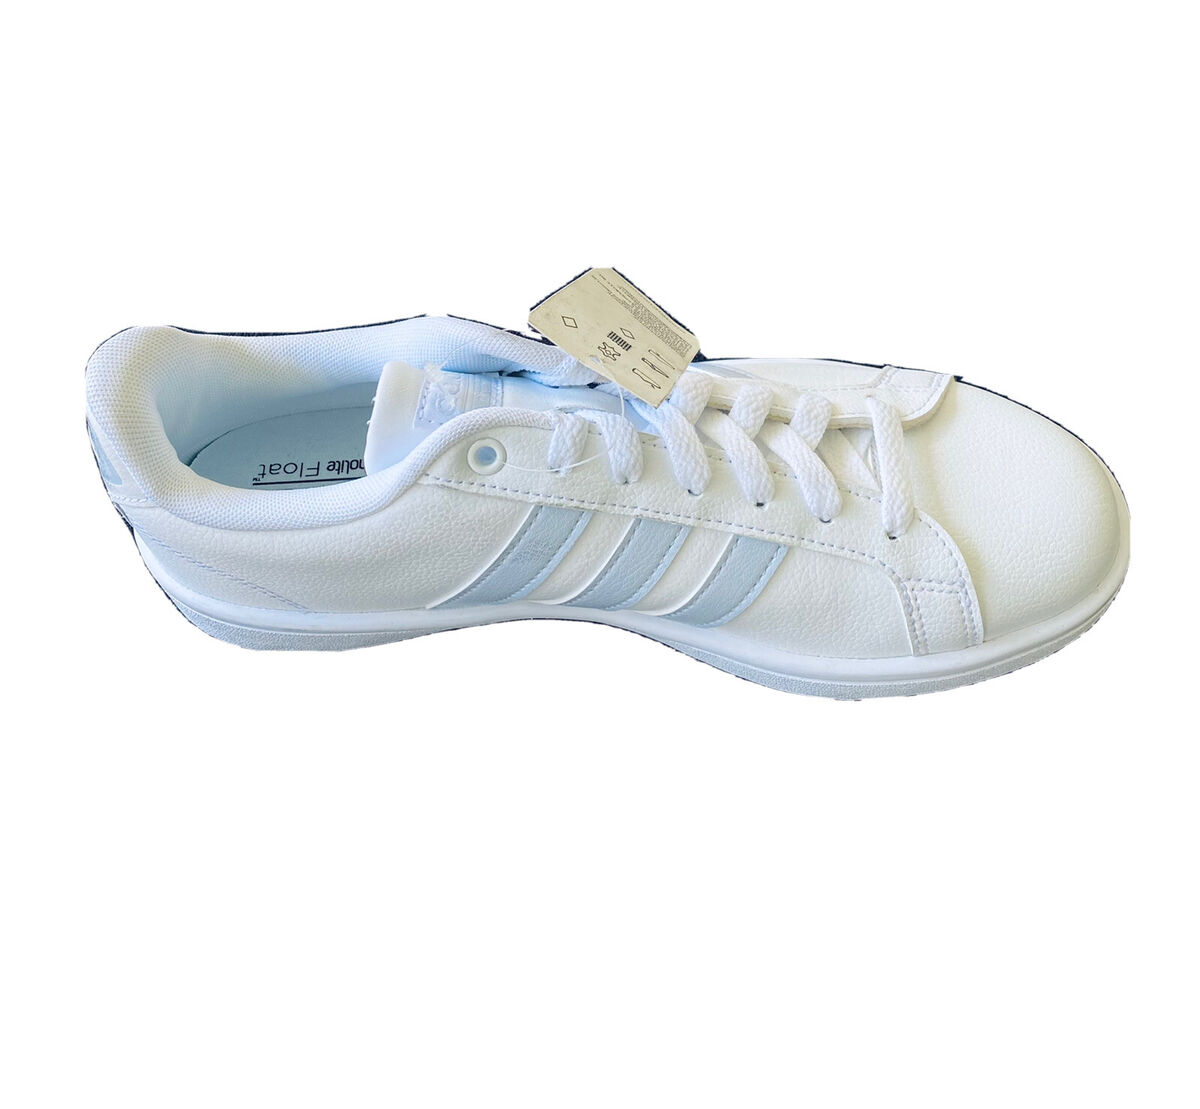 Estrecho de Bering éxito Emigrar Adidas ortholite float cloudfoam WHITE women's sneaker athletic shoe US 8.5  | eBay